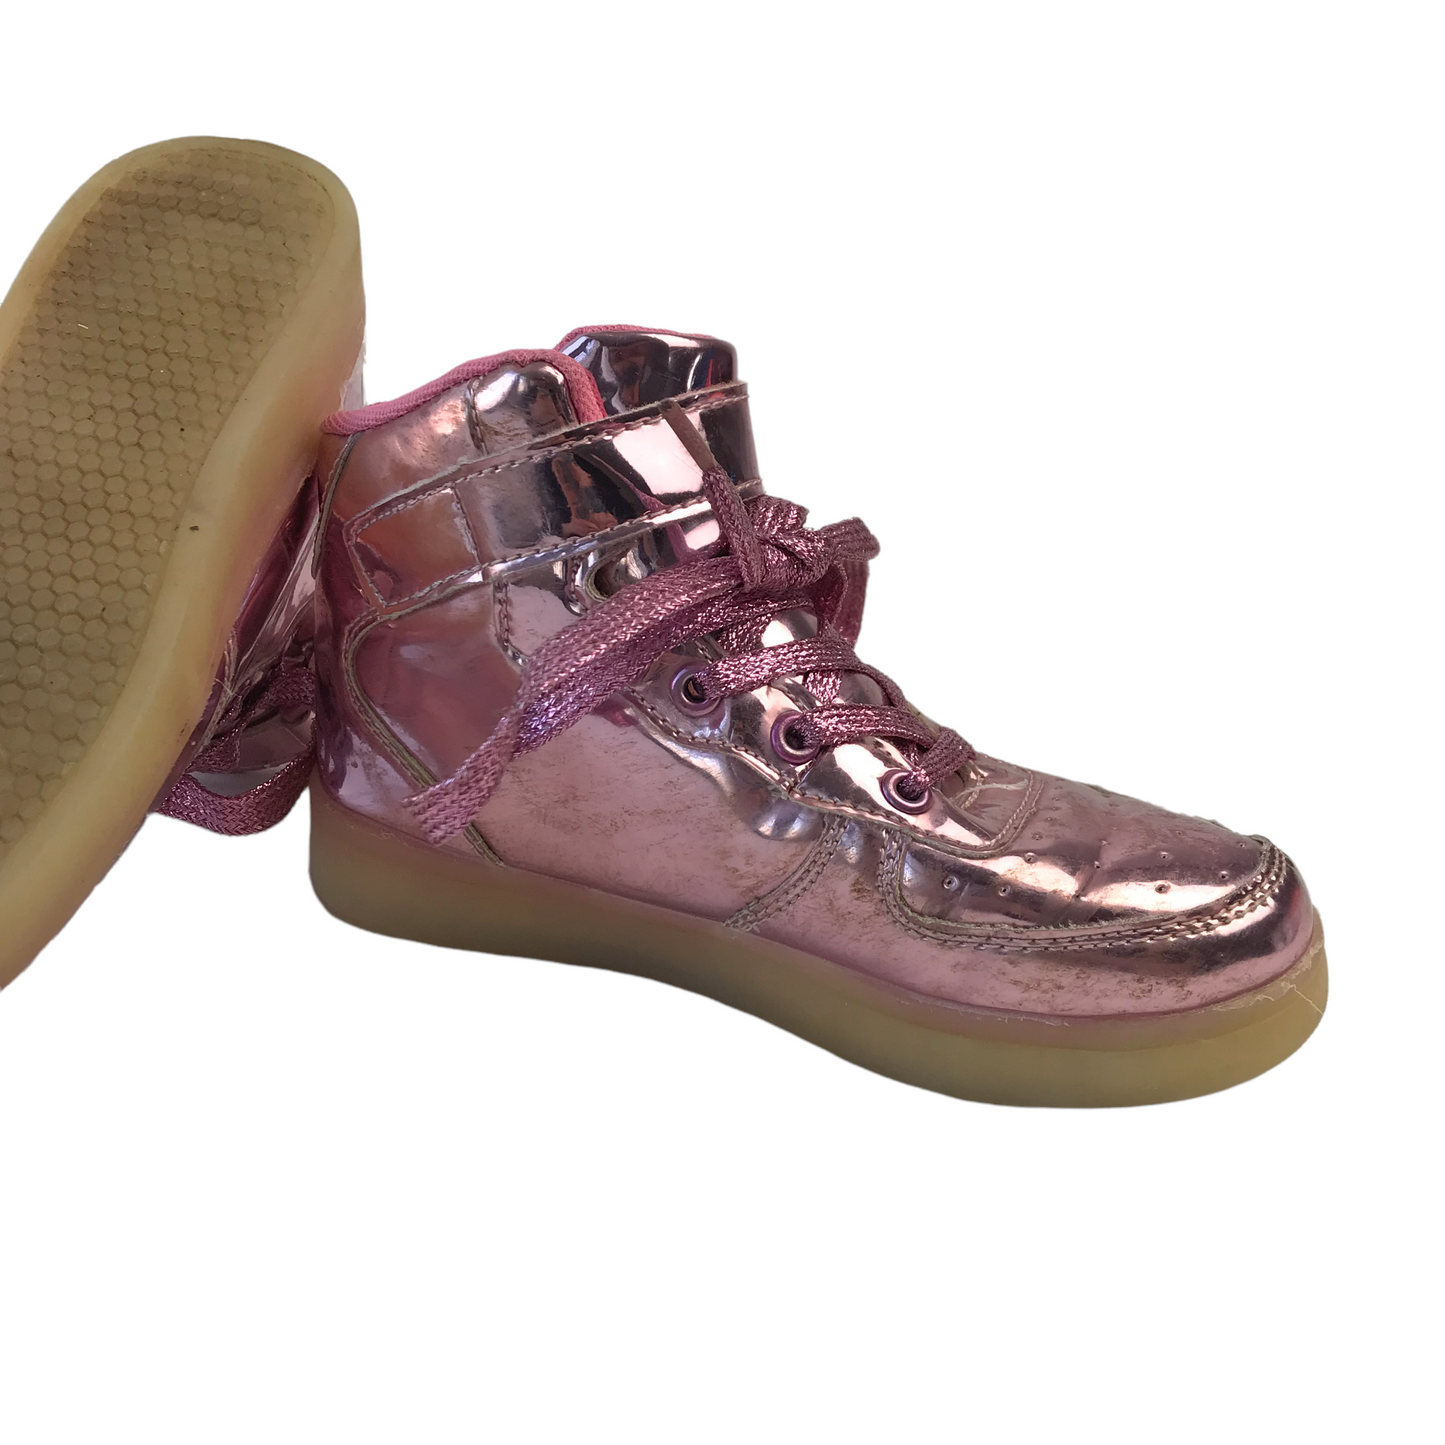 Metallic Shine Pink High Tops Trainers Shoe Size 11.5 (jr)